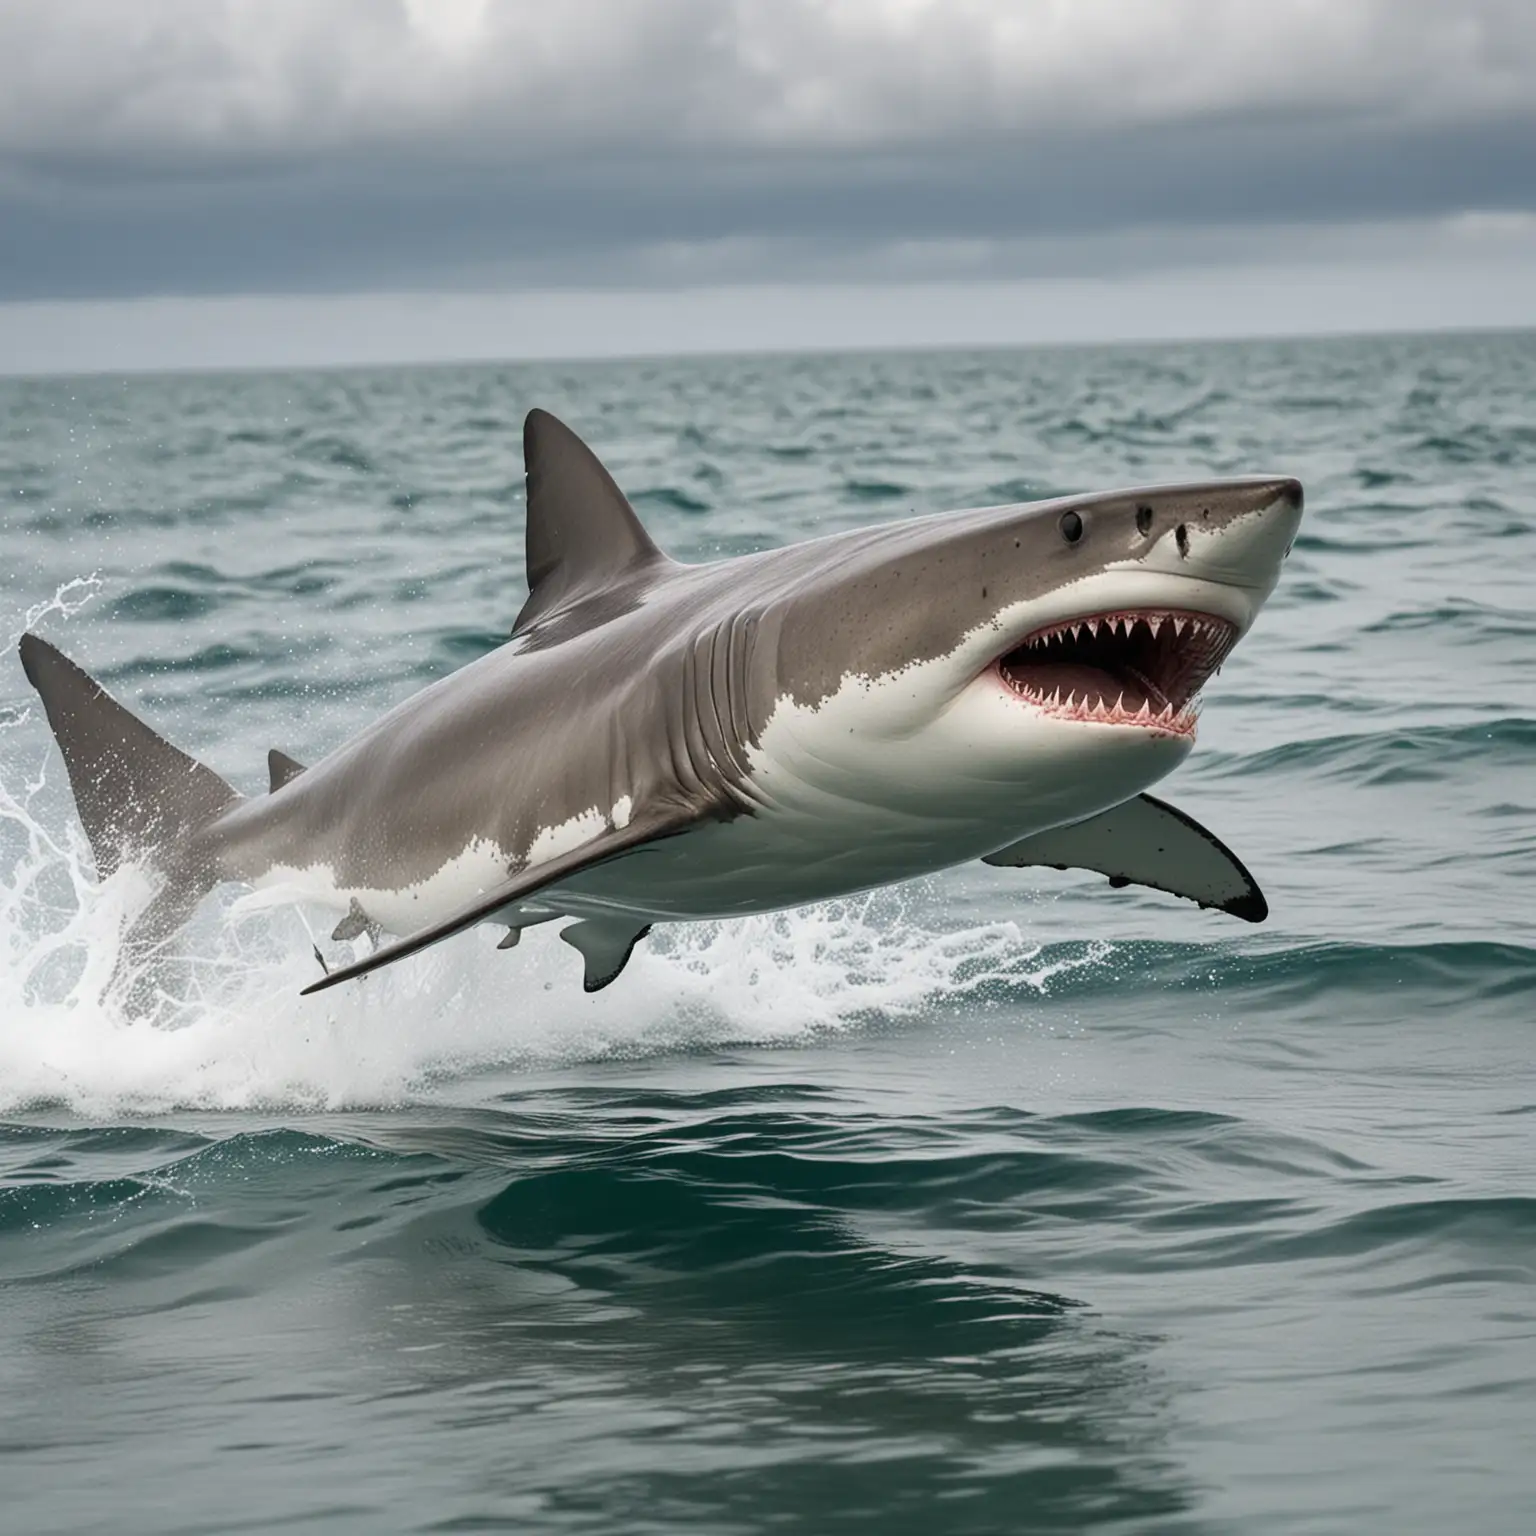 HighSpeed Shark Pursuit in Deep Ocean Waters